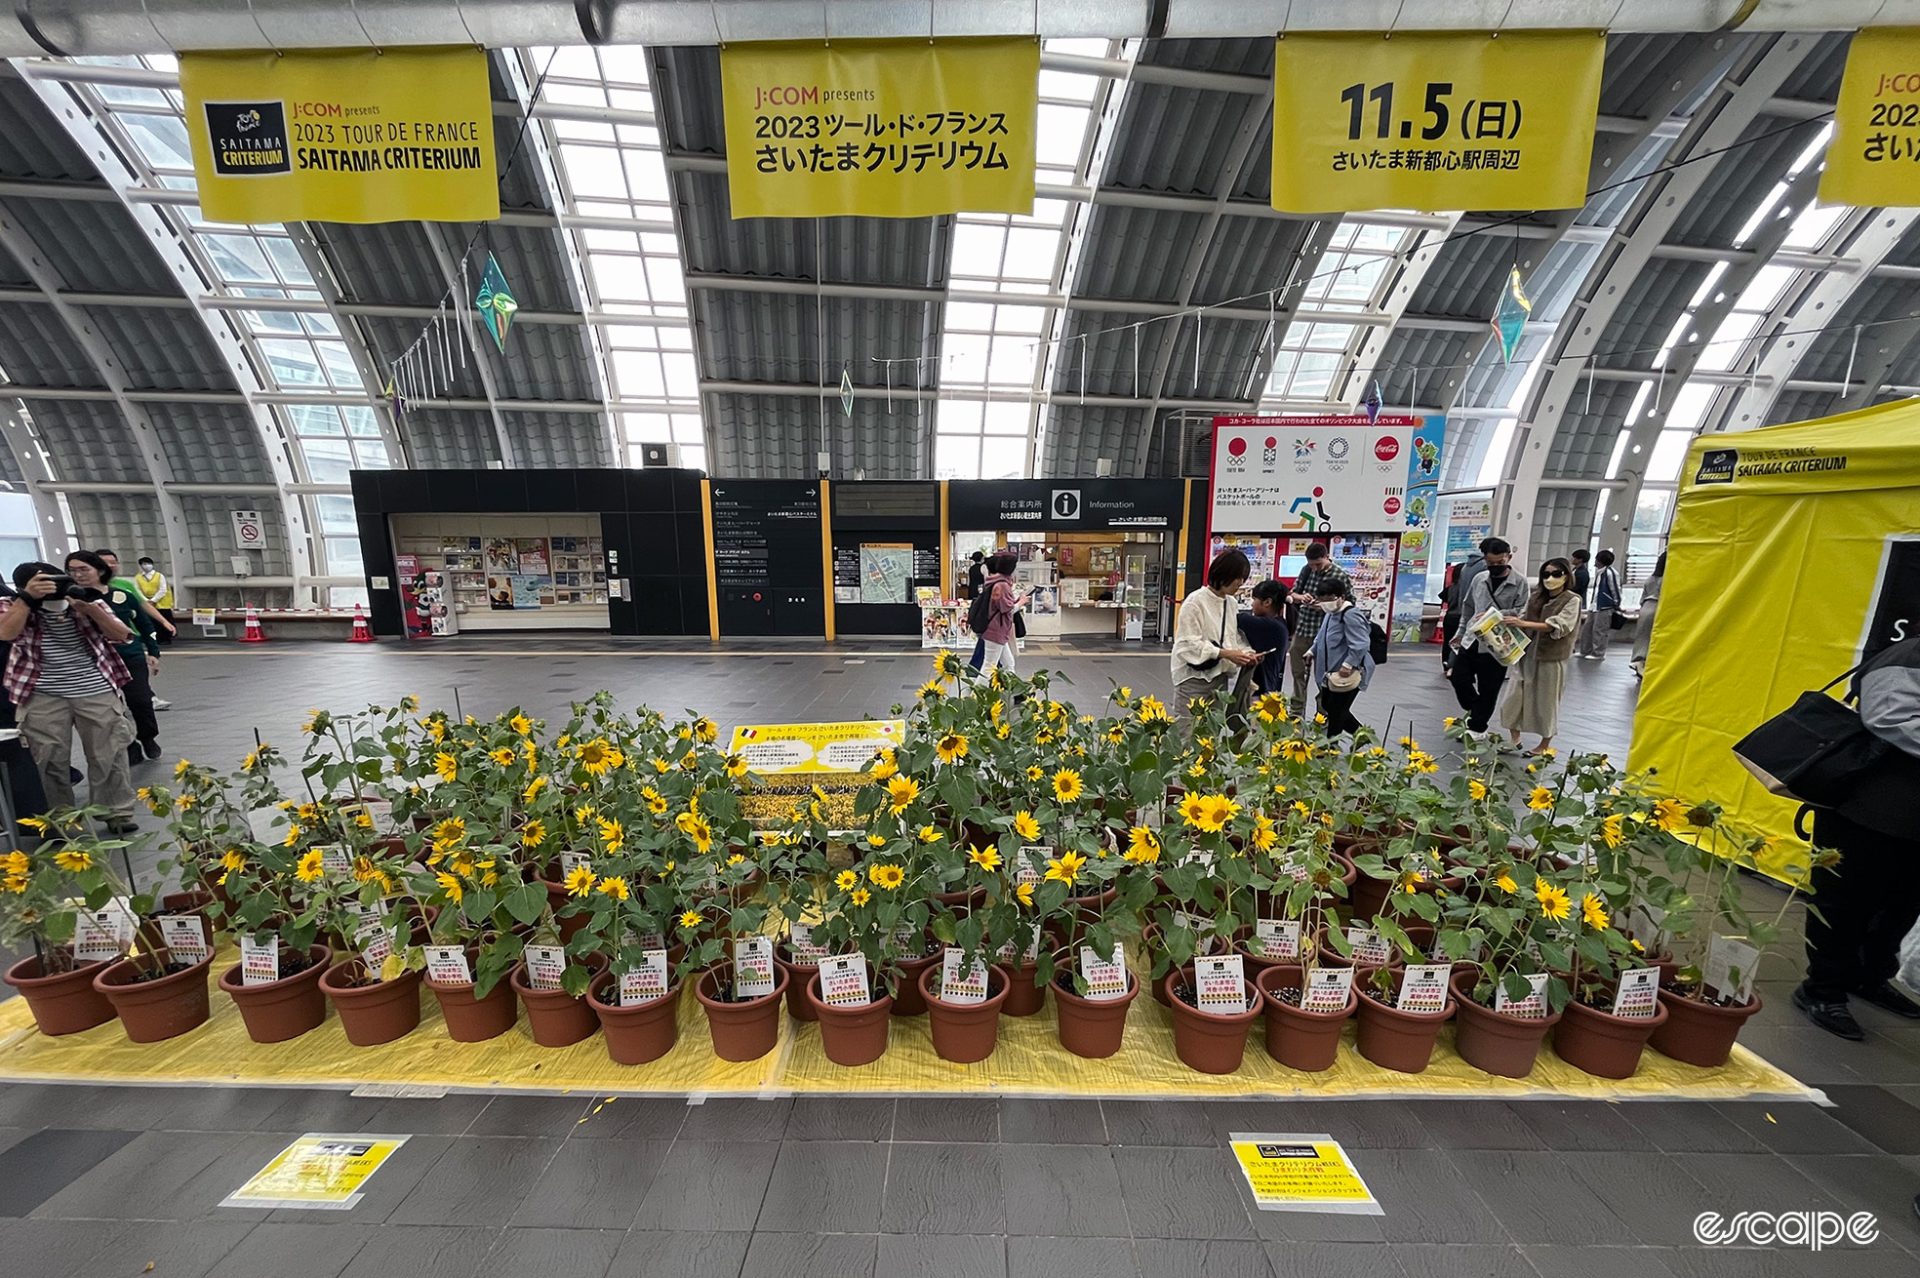 Sunflowers grown to honour the Tour de France inside Saitama train station.